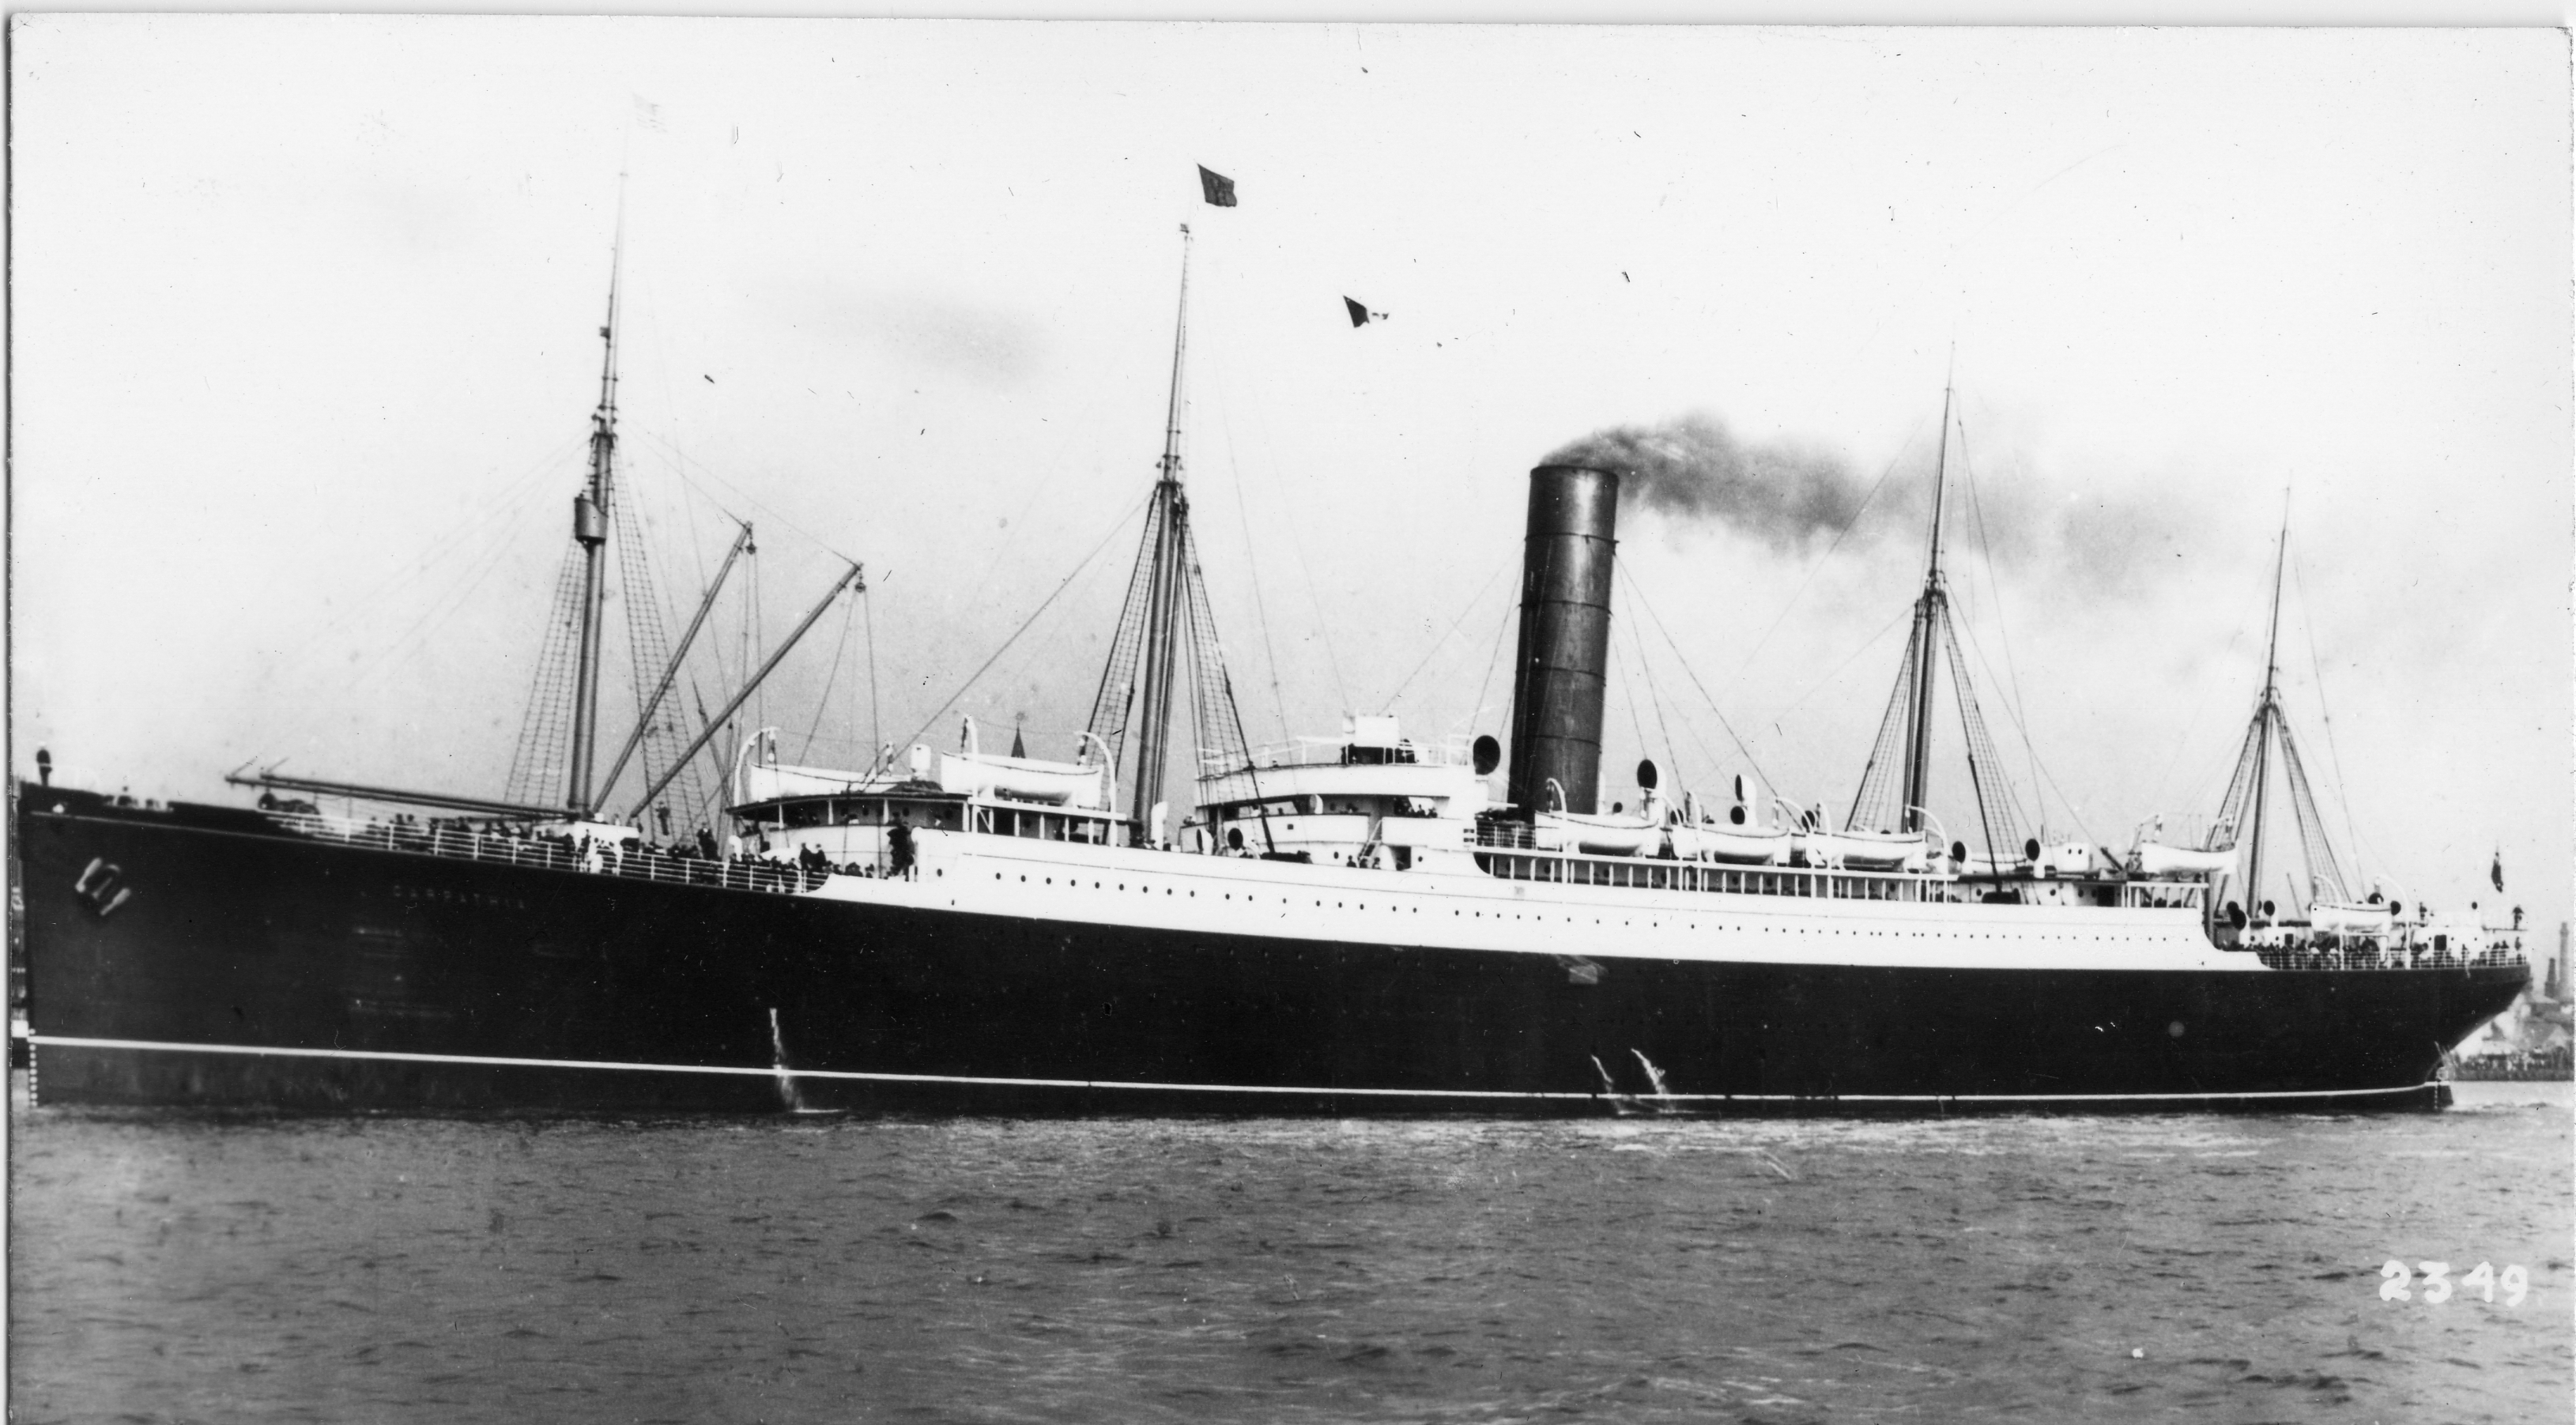 Carpathia, the ship that rescued the Titanic survivors